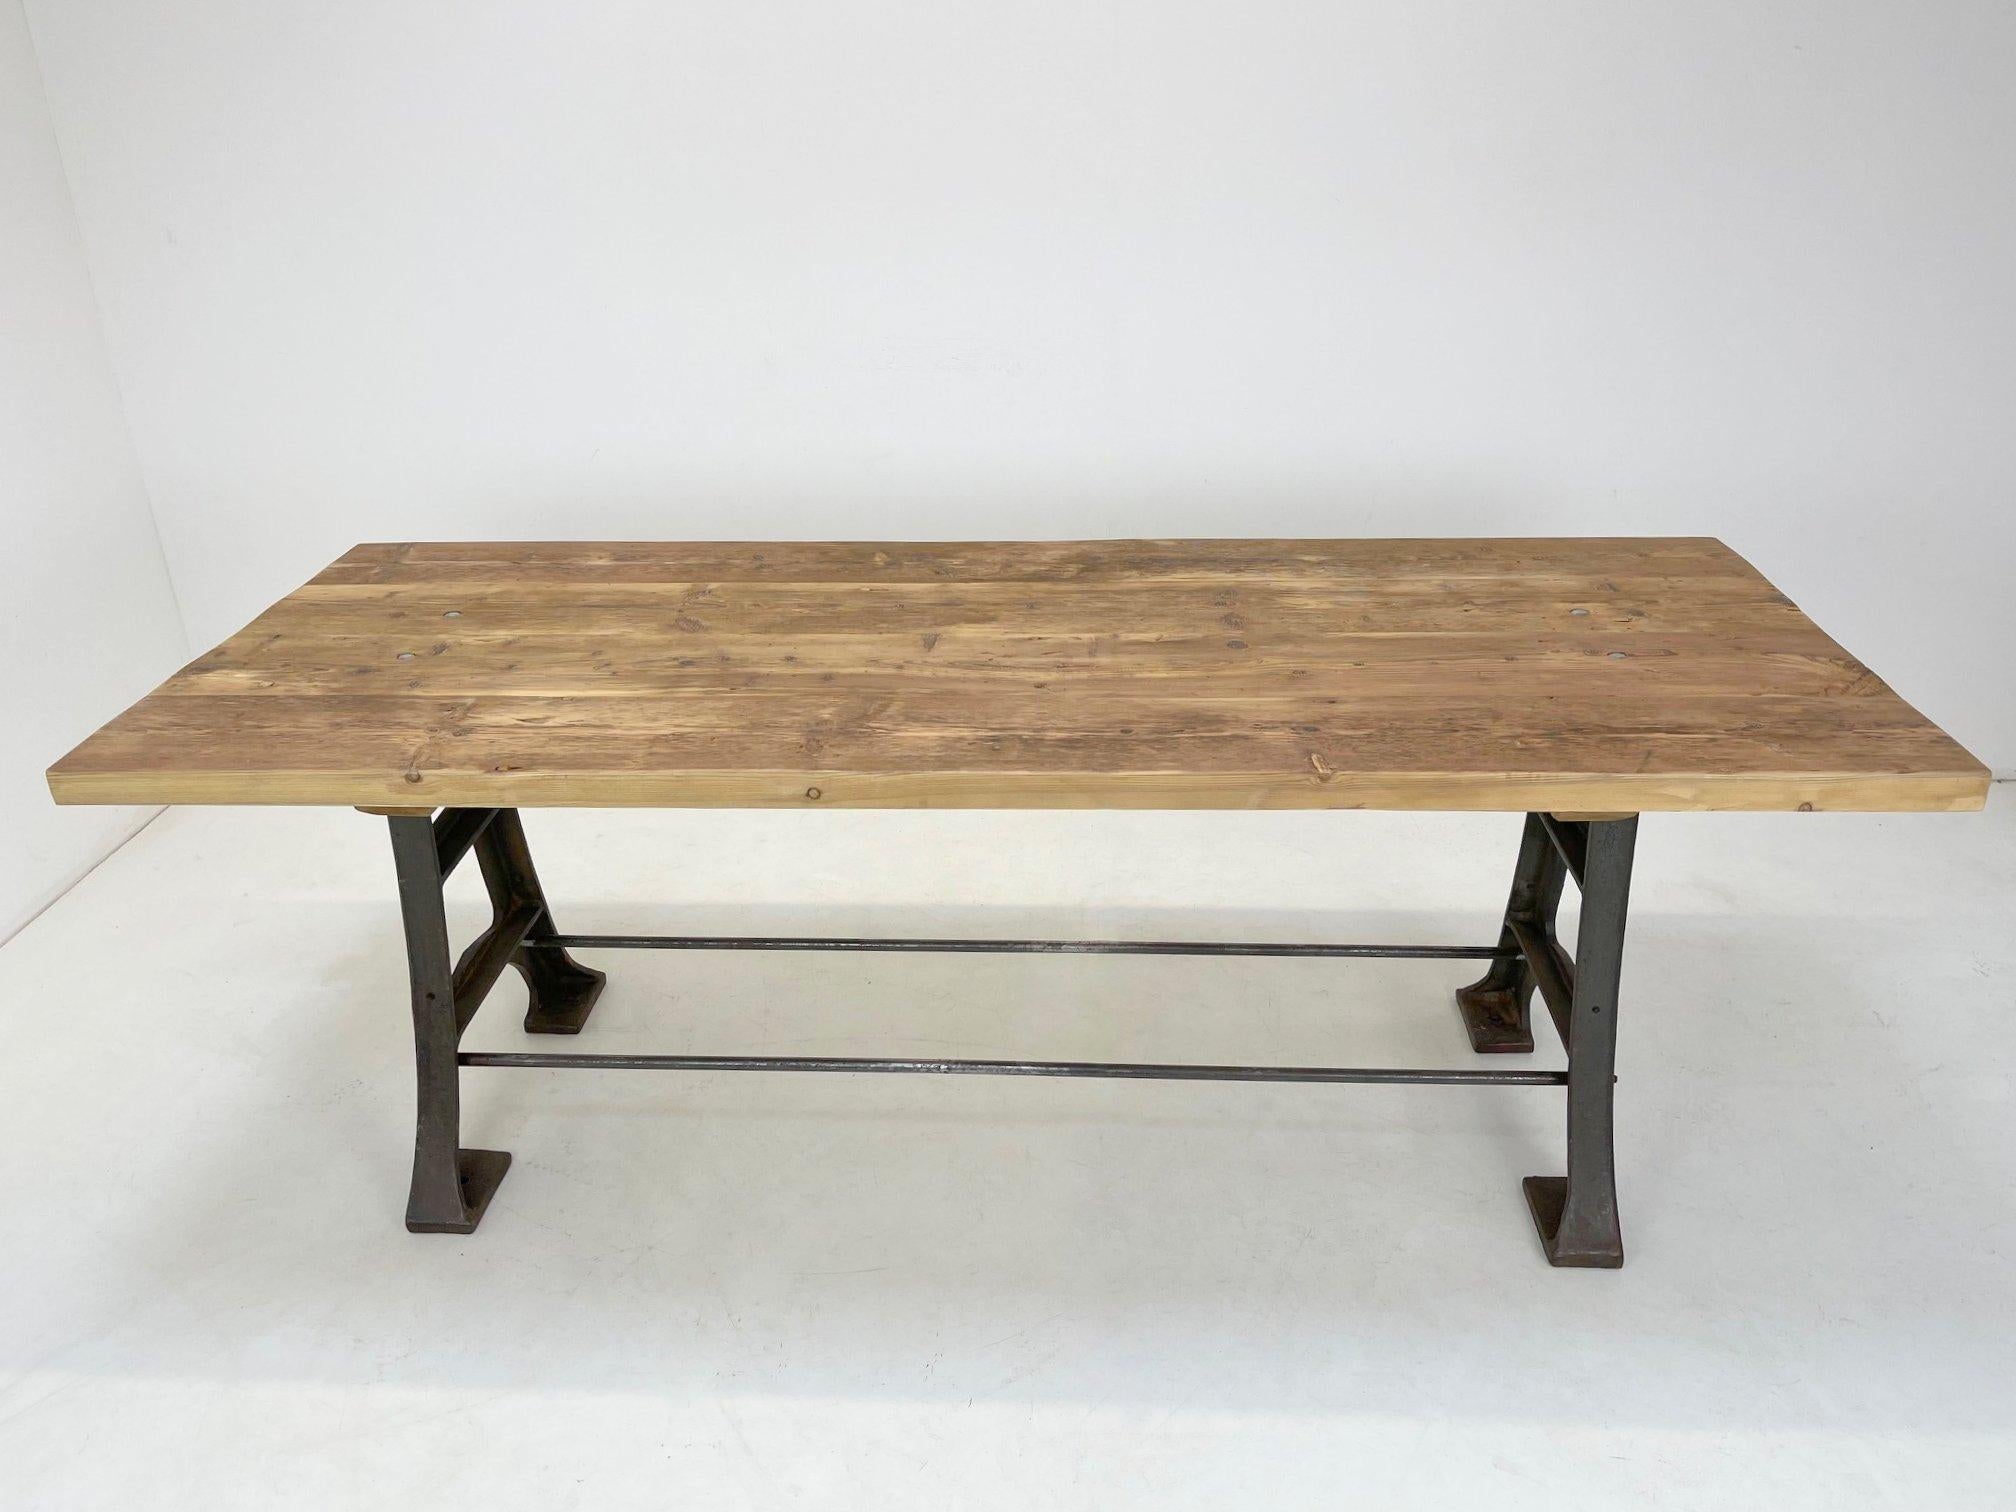 20th Century Wood & Steel Industrial Table